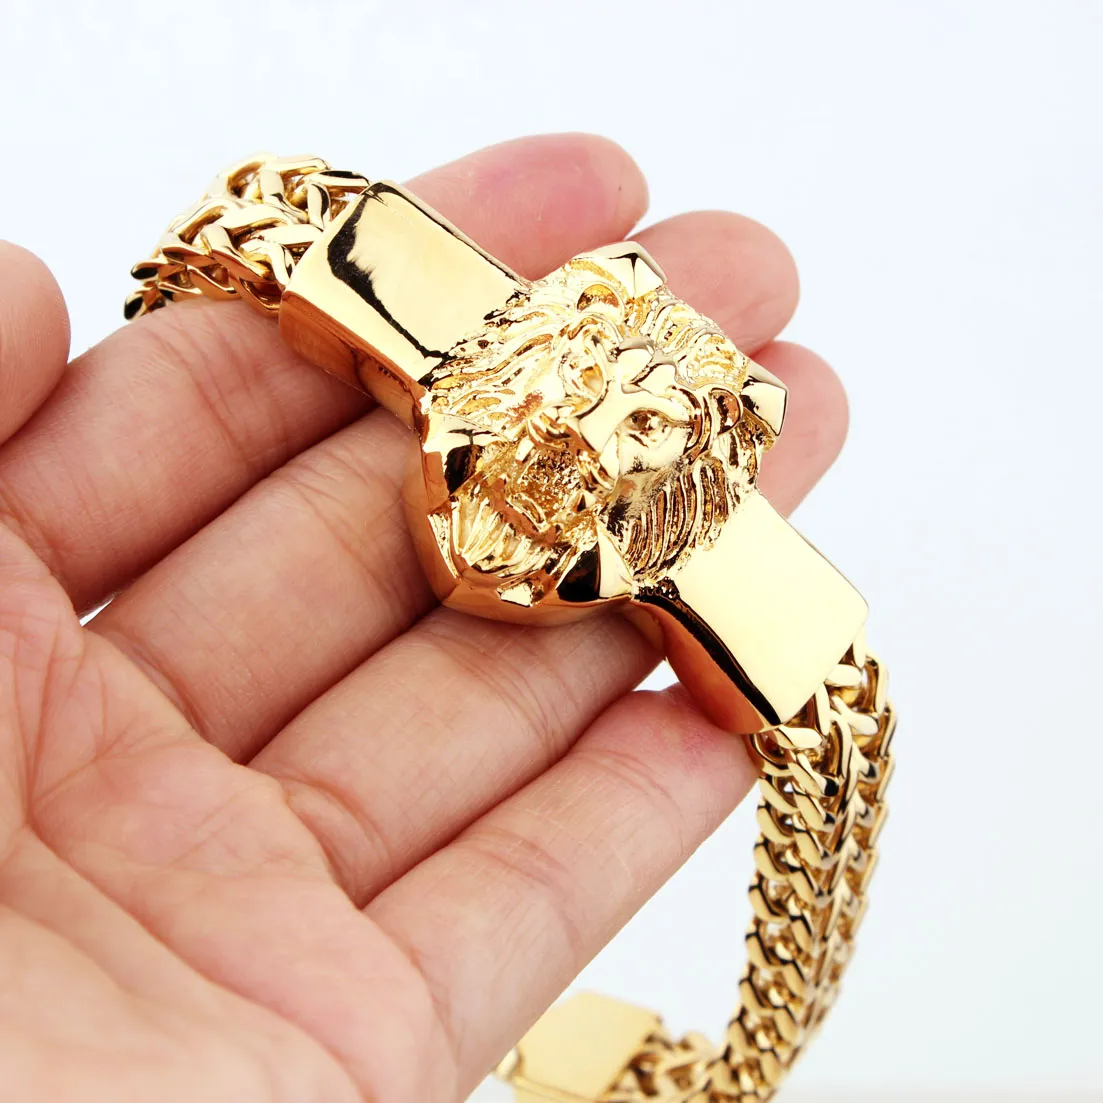 David Yurman | Streamline Cuff Bracelet in 18K Yellow Gold, 5.5mm | Mens  bracelet gold jewelry, Jewelry bracelets gold, Mens gold jewelry